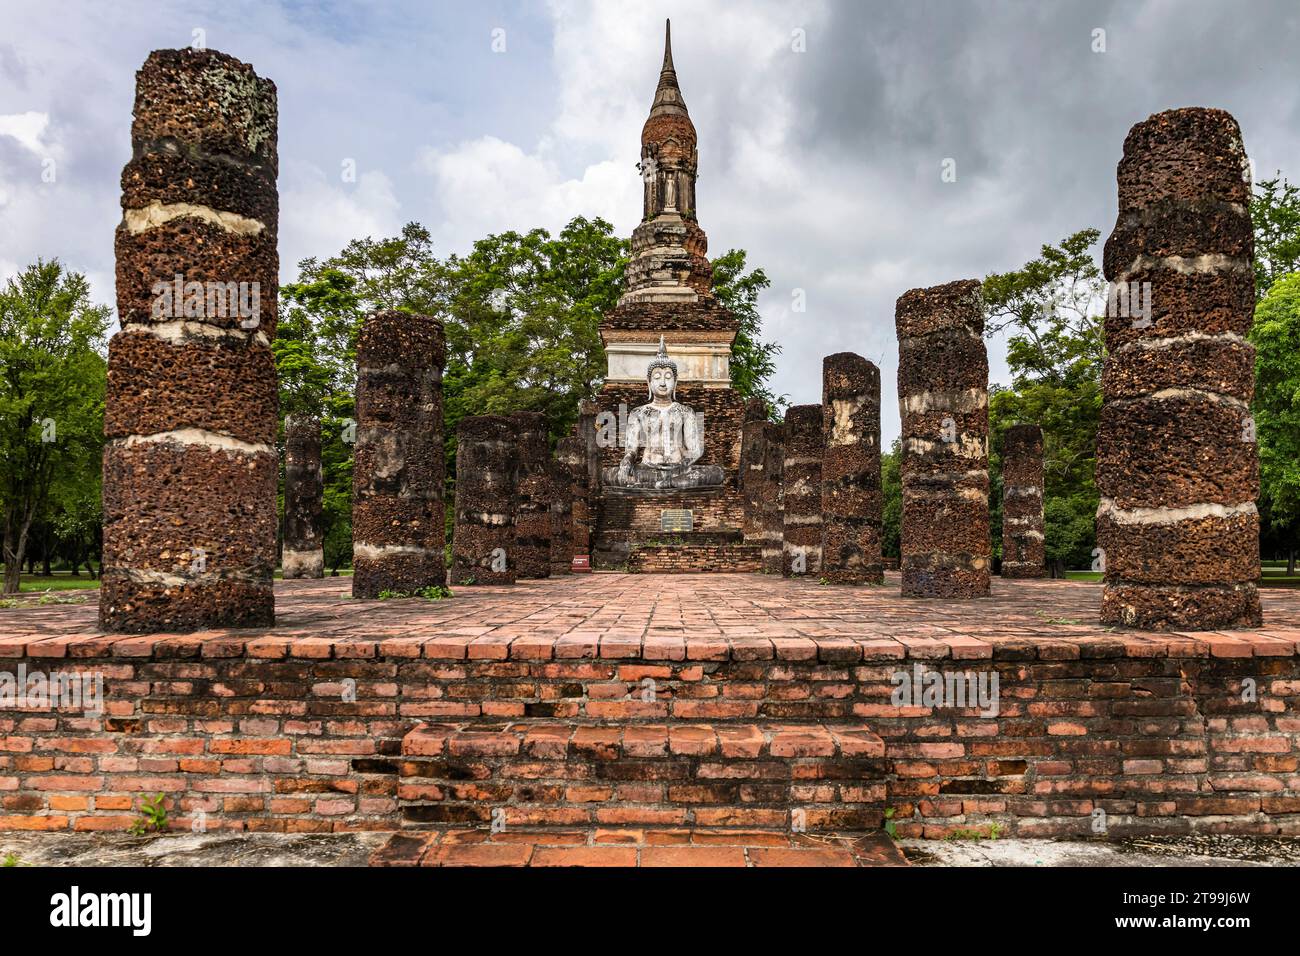 Parco storico di Sukhothai, Wat Traphang Ngoen, santuario principale con statua di Buddha e stupa, Sukhothai, Thailandia, Sud-est asiatico, Asia Foto Stock